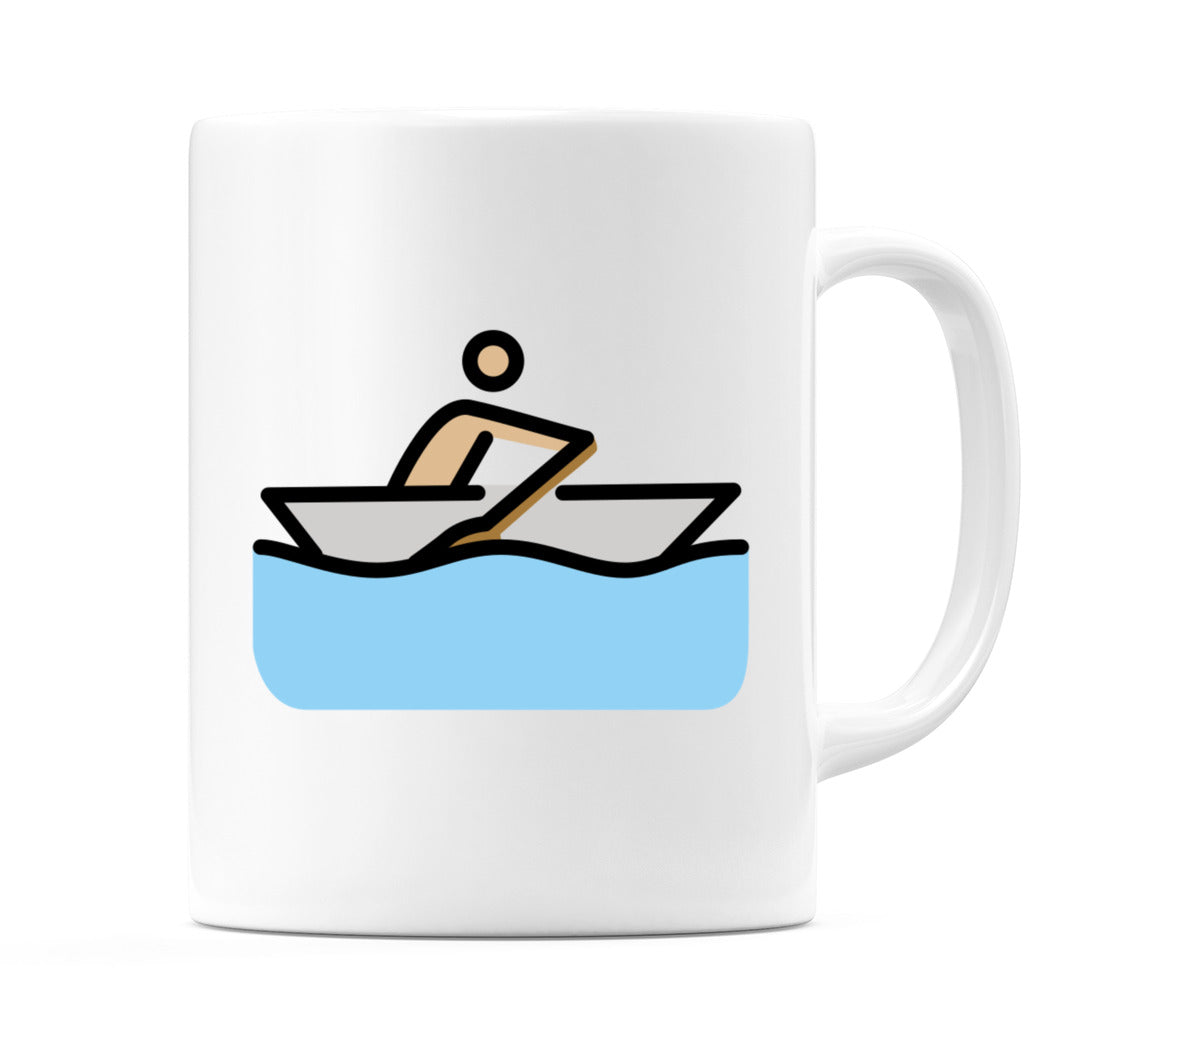 Person Rowing Boat: Medium-Light Skin Tone Emoji Mug